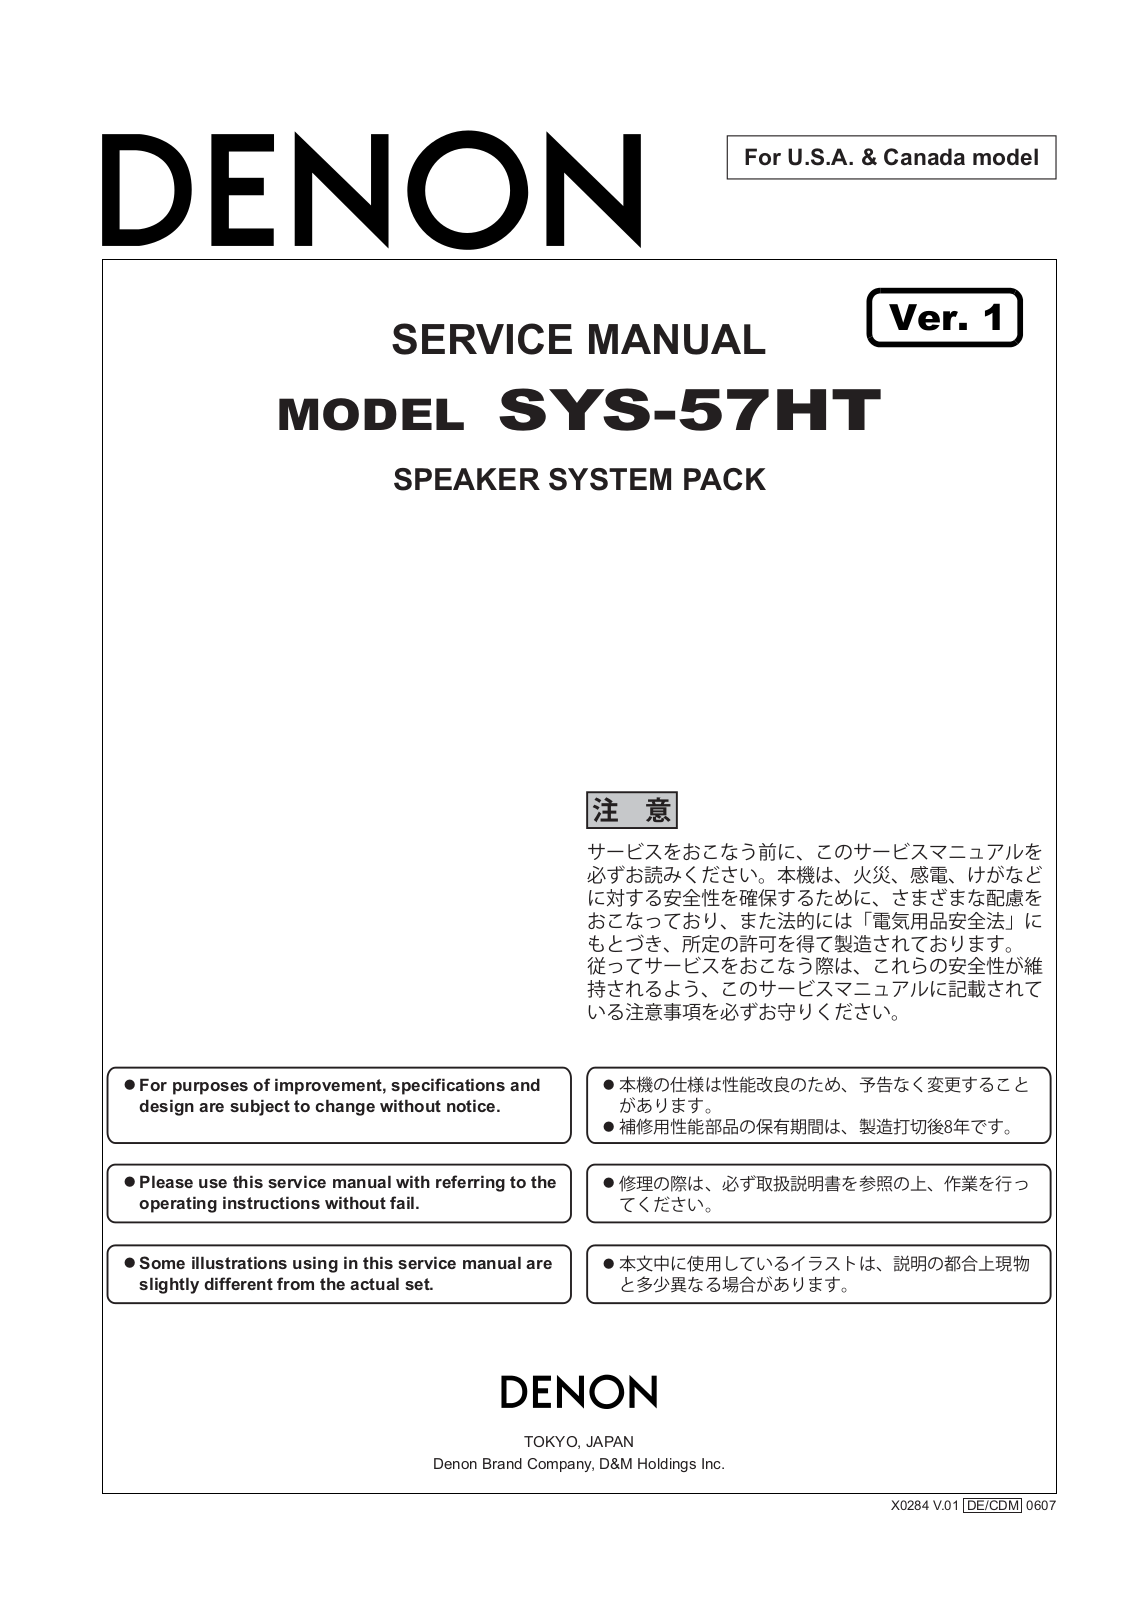 Denon SYS-57HT Service Manual